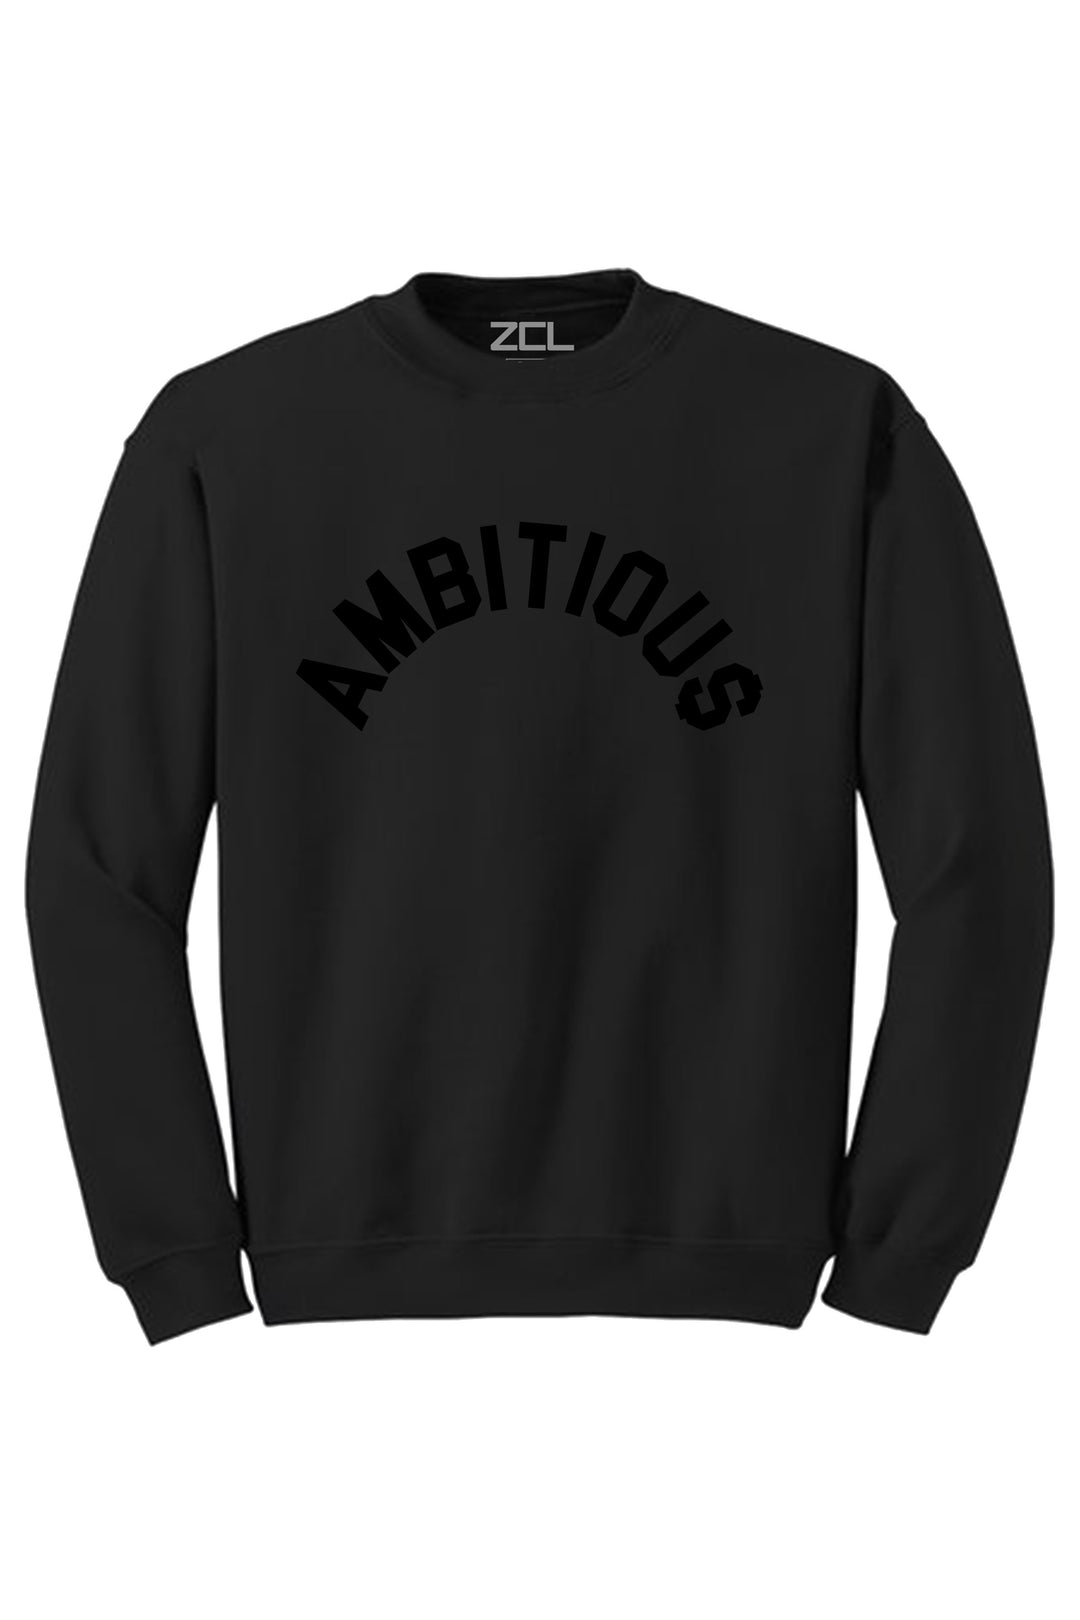 Ambitious Crewneck Sweatshirt (Black Logo) - Zamage